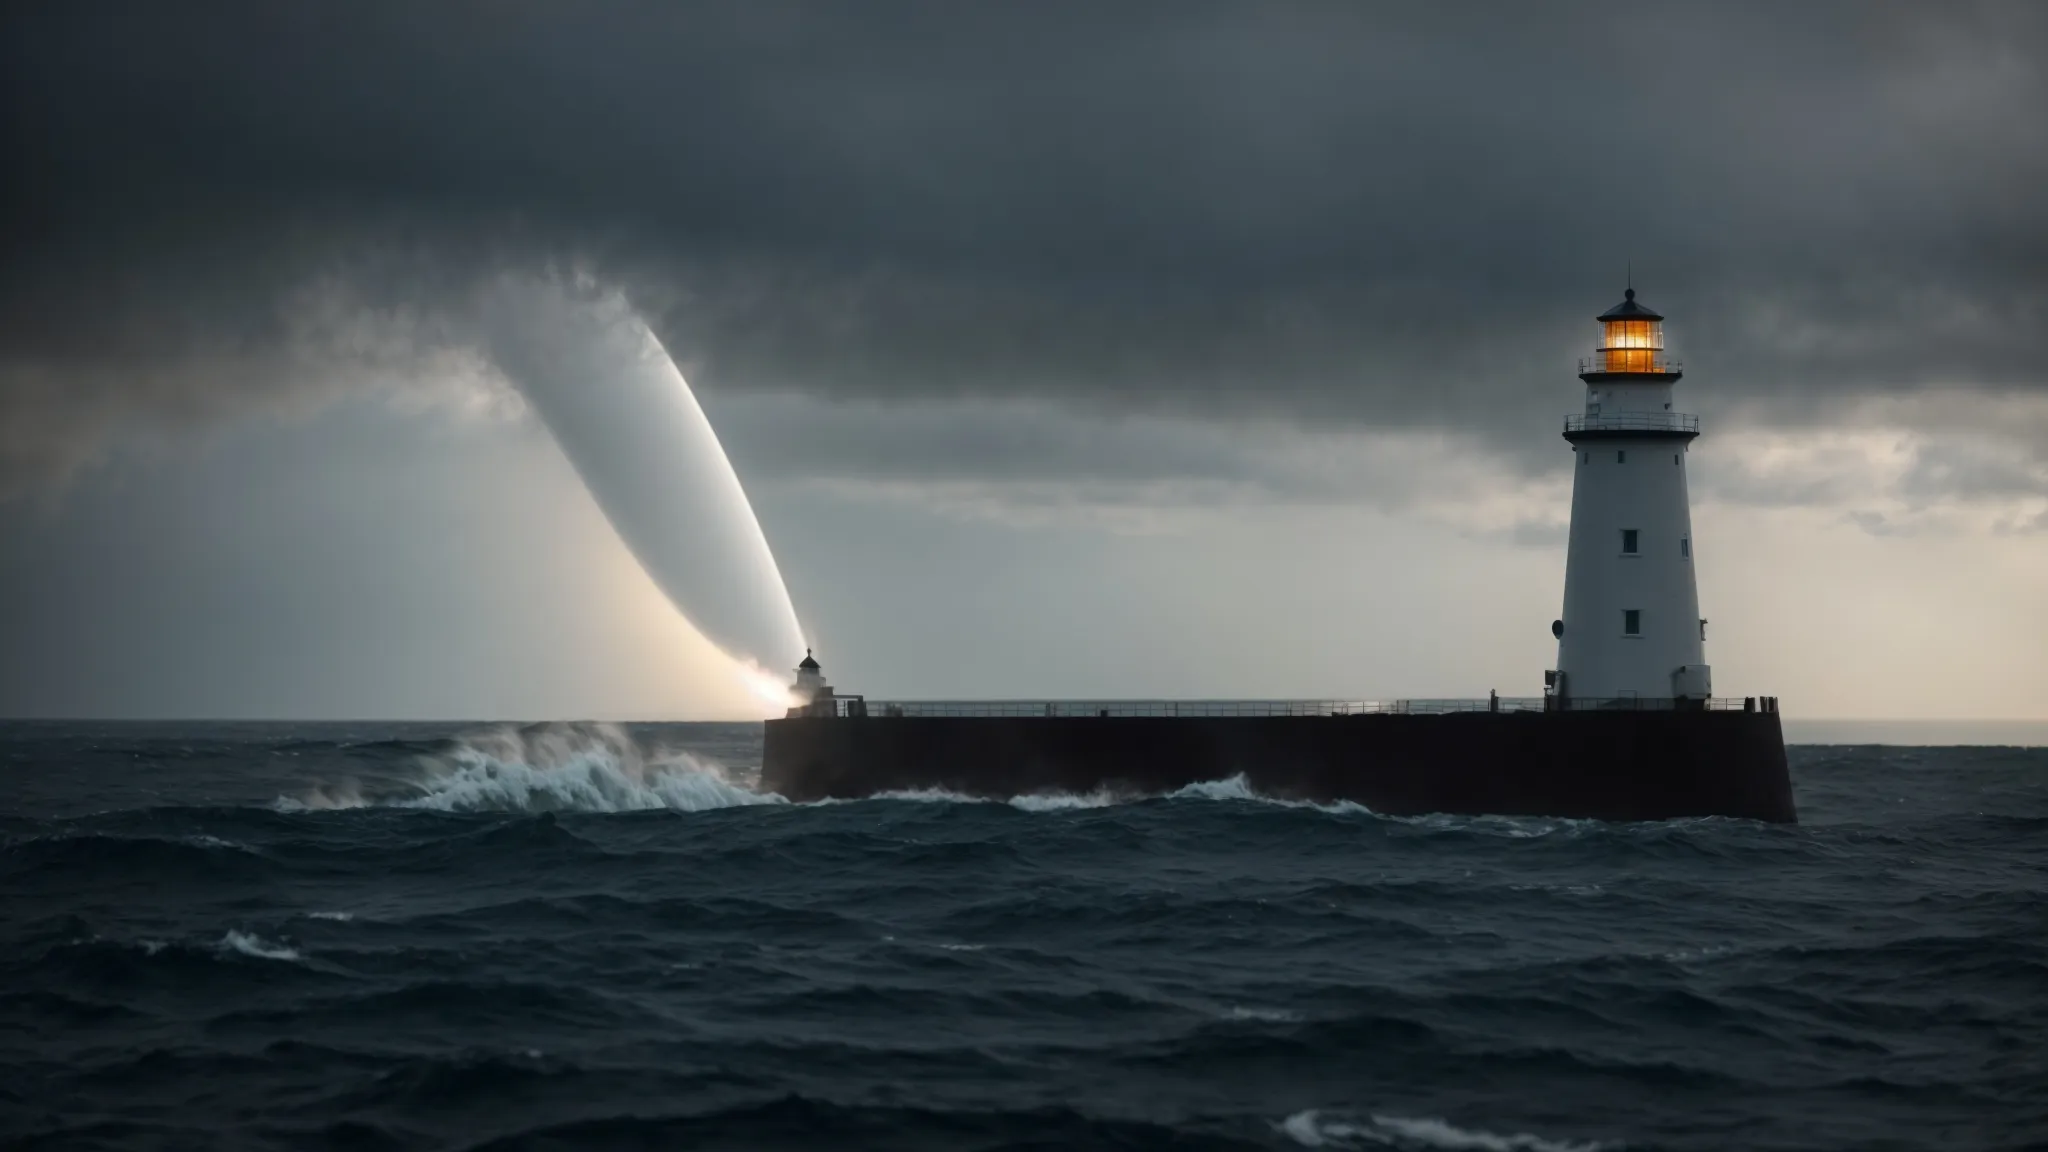 a lighthouse beams brightly across the digital sea, guiding ships towards it amidst a dark, vast ocean.